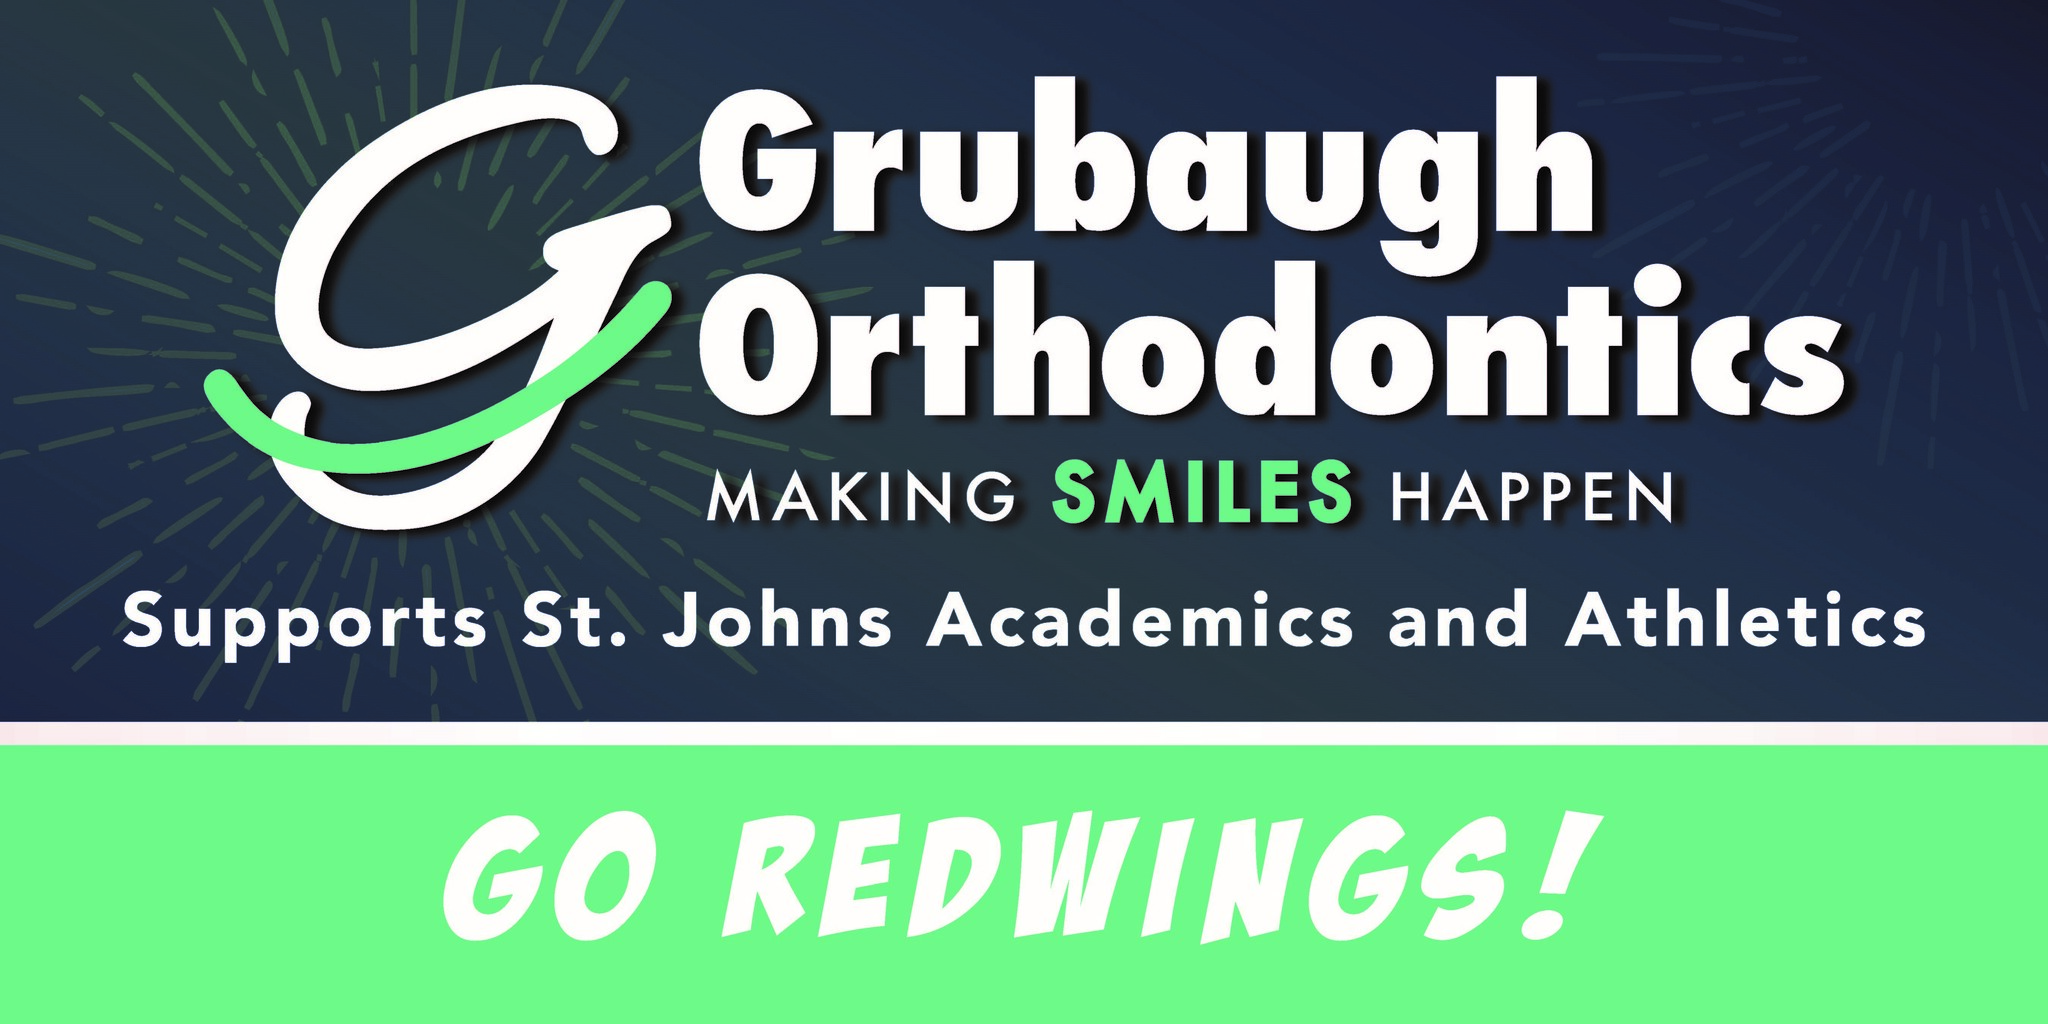 Grubaugh Orthodontics